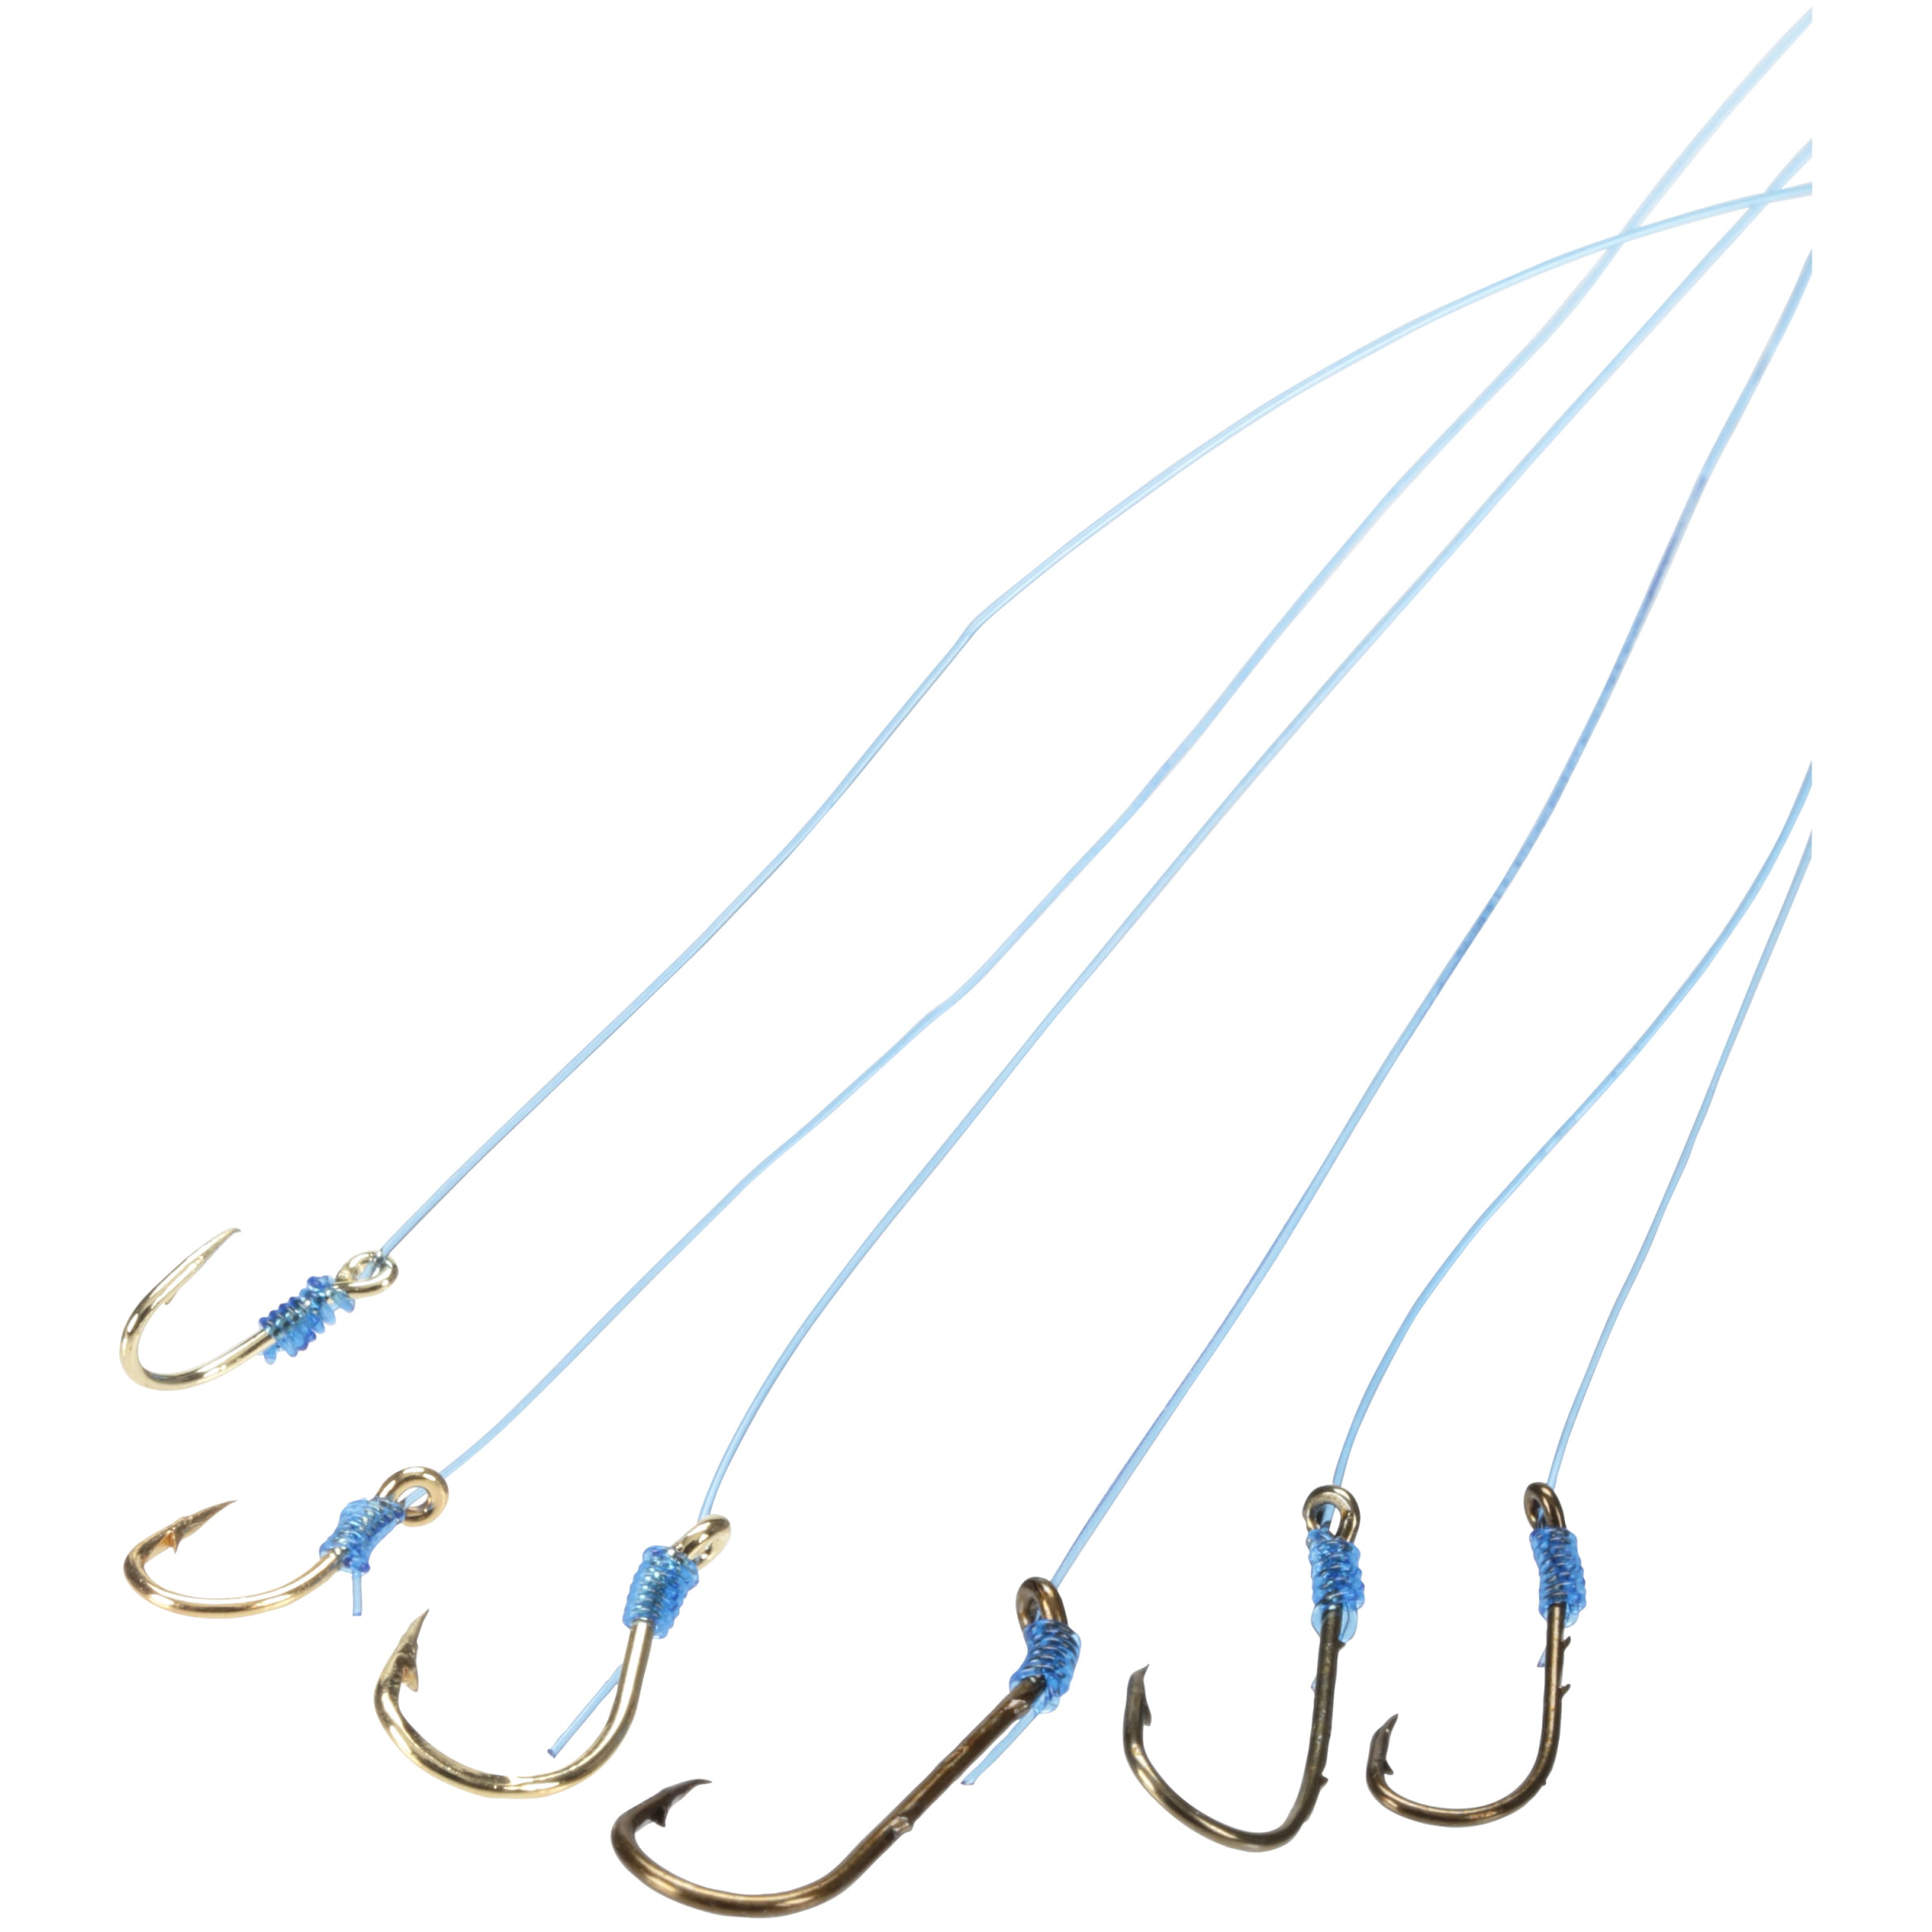 South BendÂ® Snelled Trout Hooks Assortment Fishing Hooks 36ct Pack 